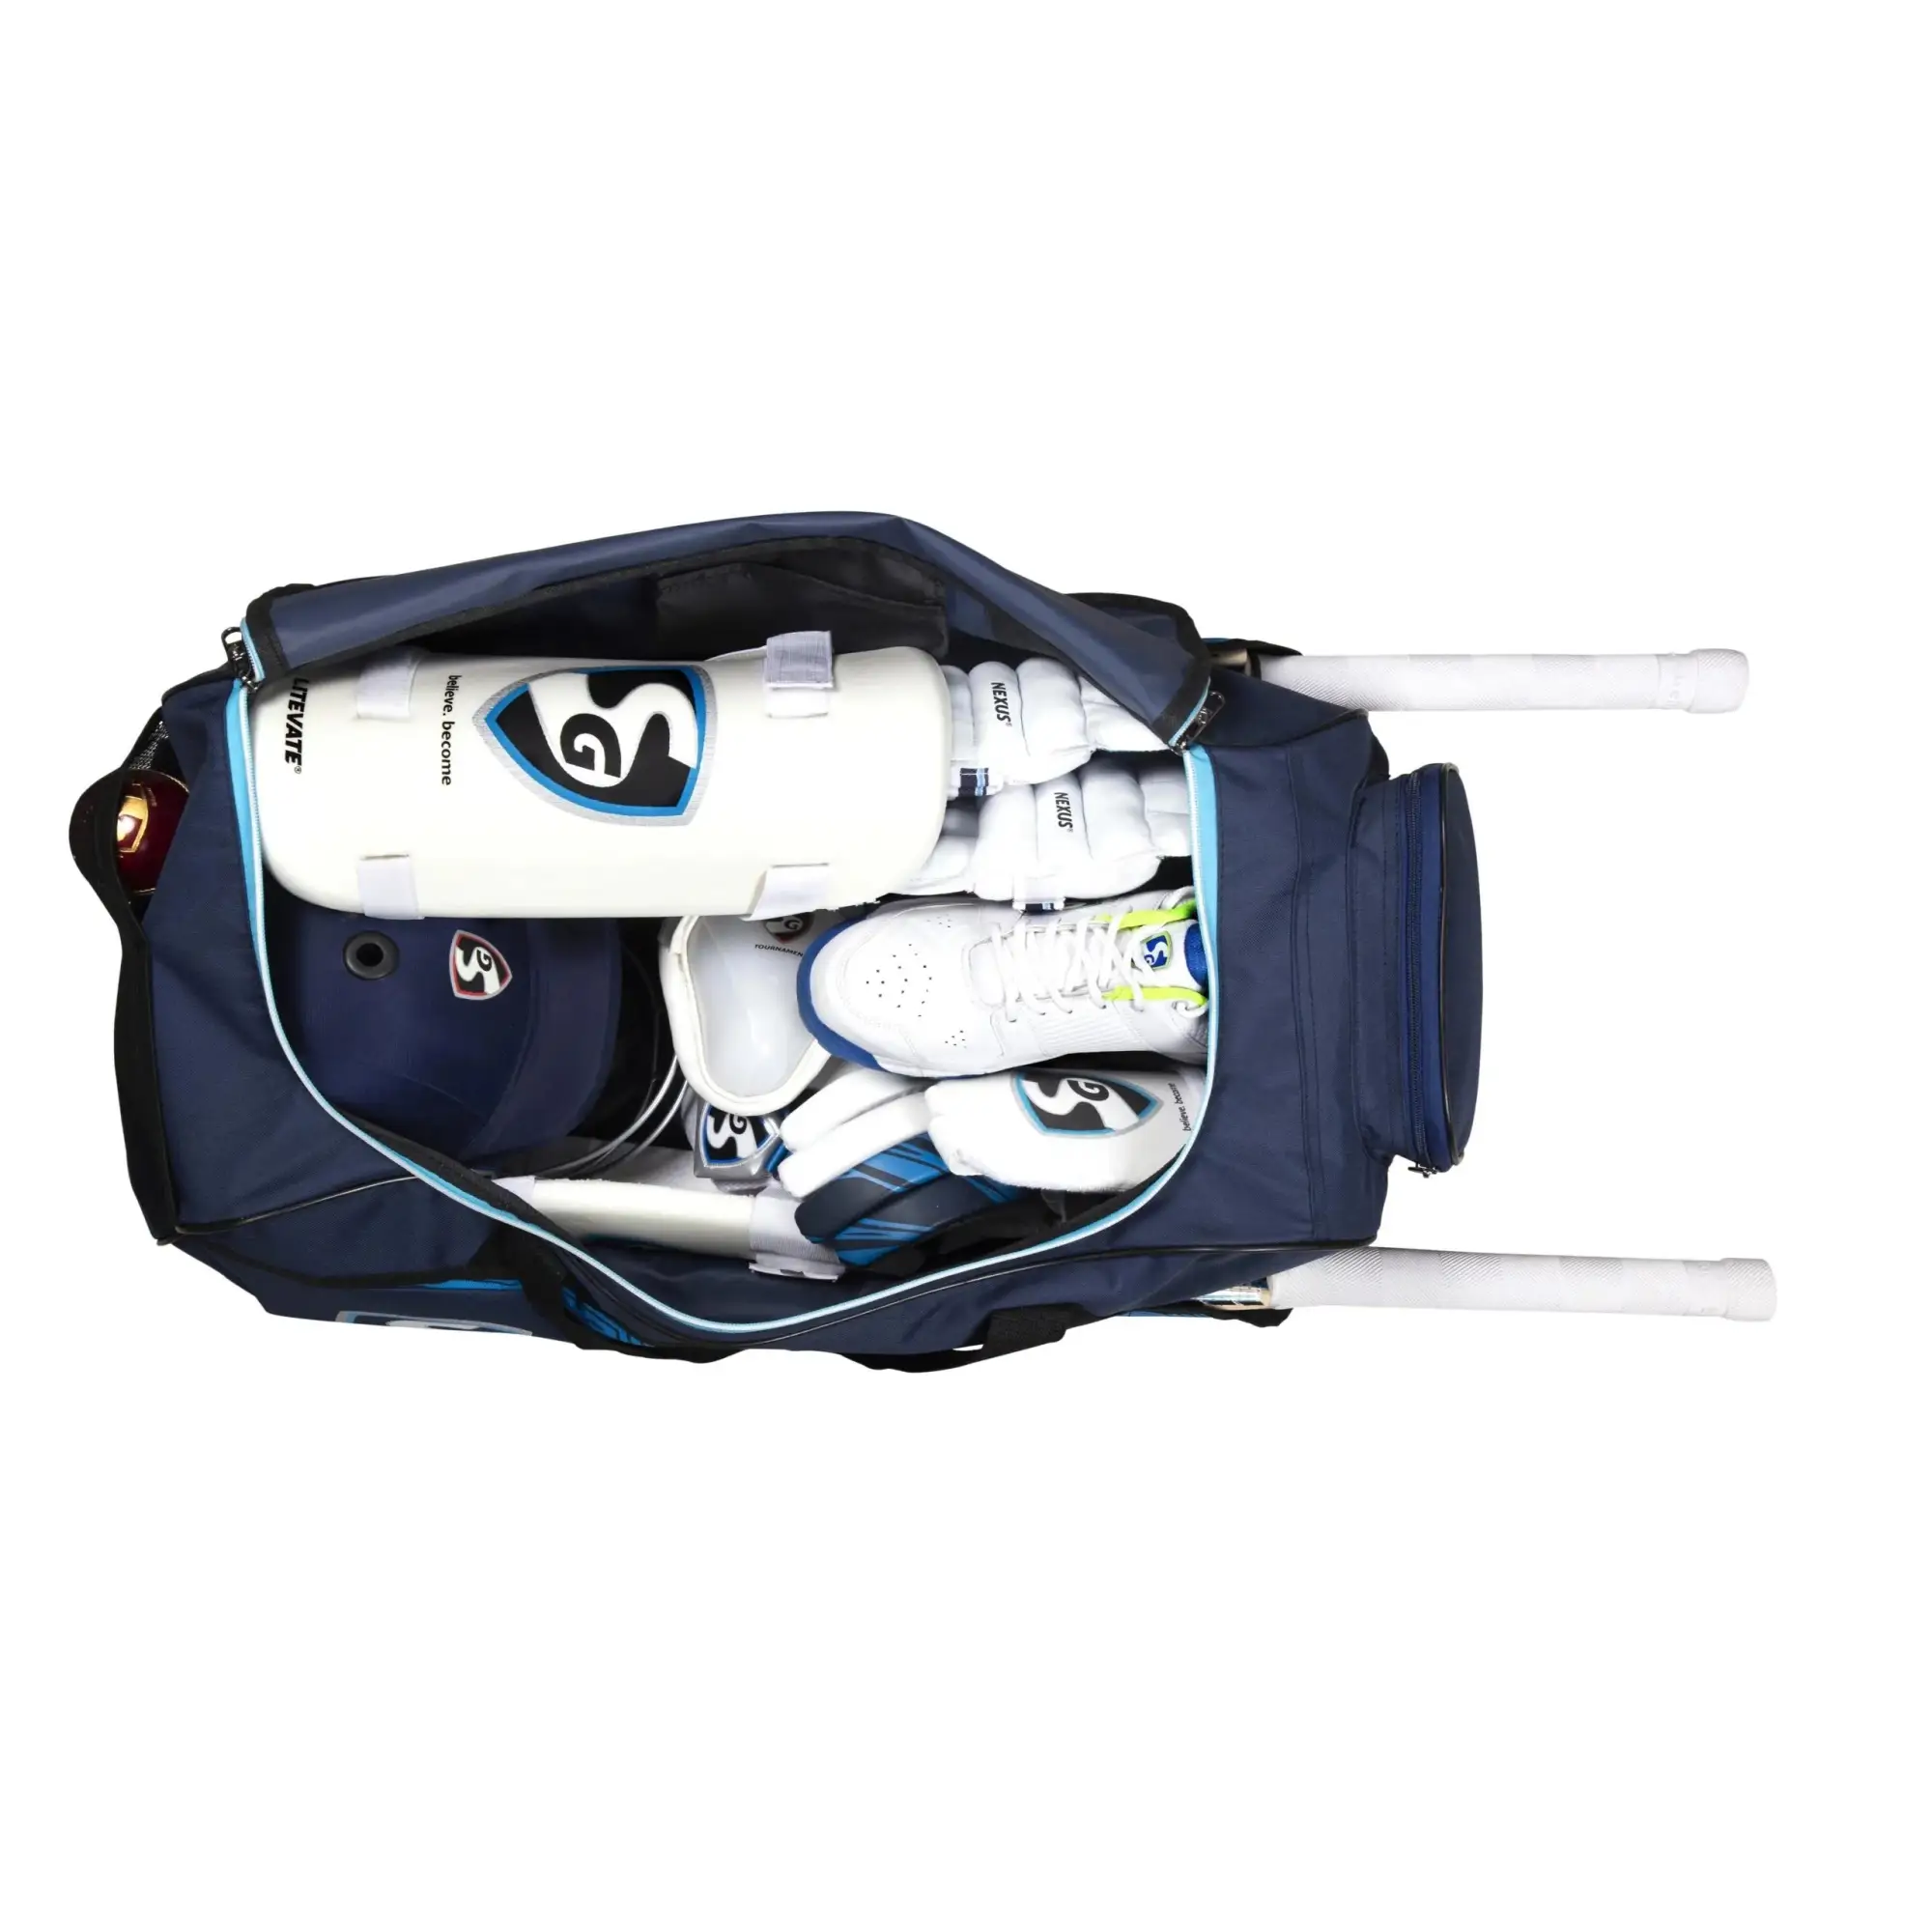 SG ComboPak 1.0 Cricket Kit Bag Wheelie - BAG - PERSONAL